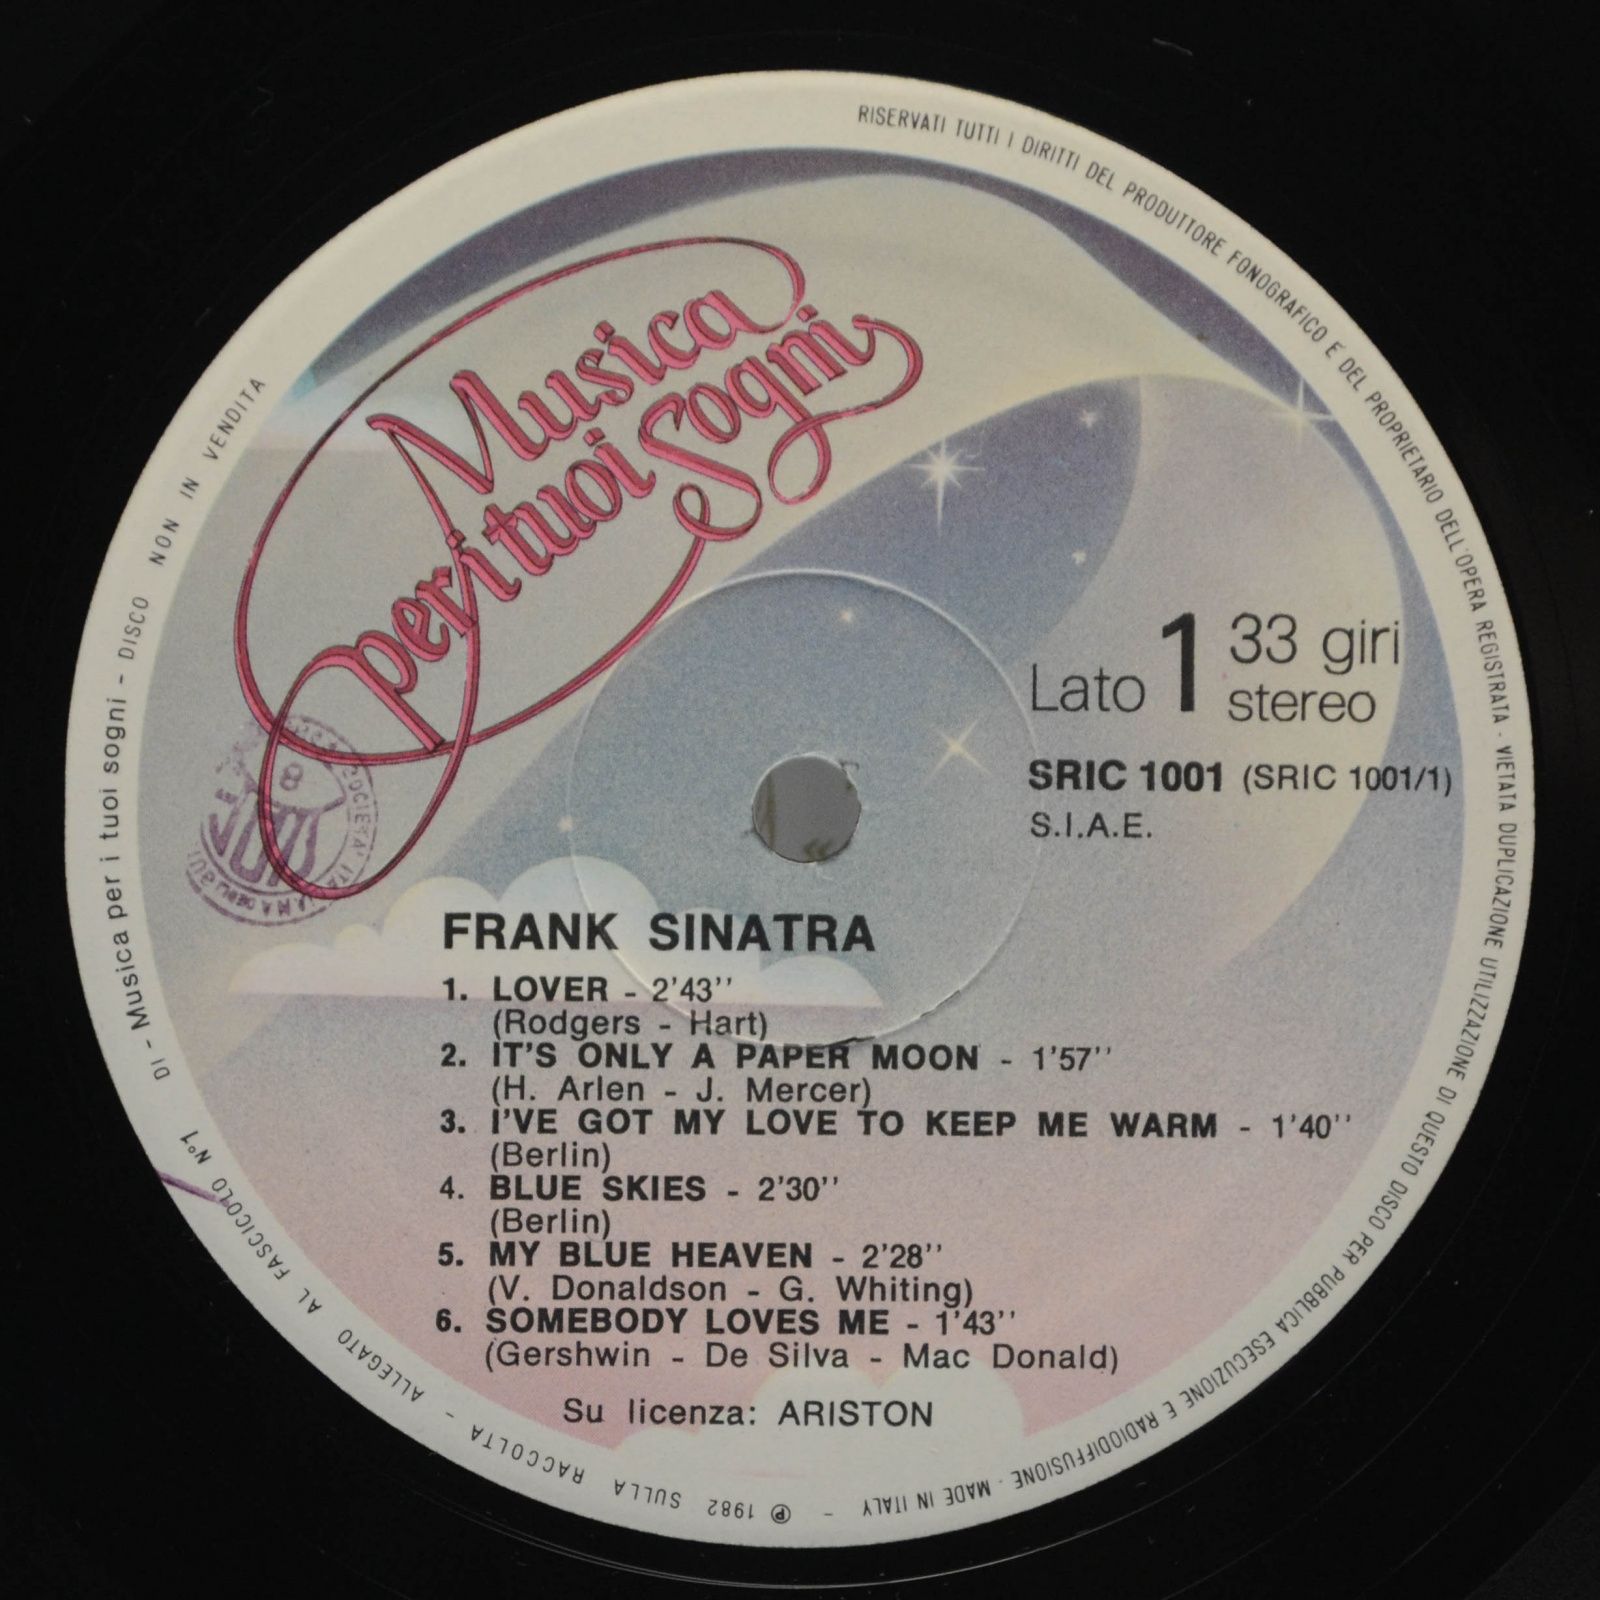 Frank Sinatra — Frank Sinatra, 1982